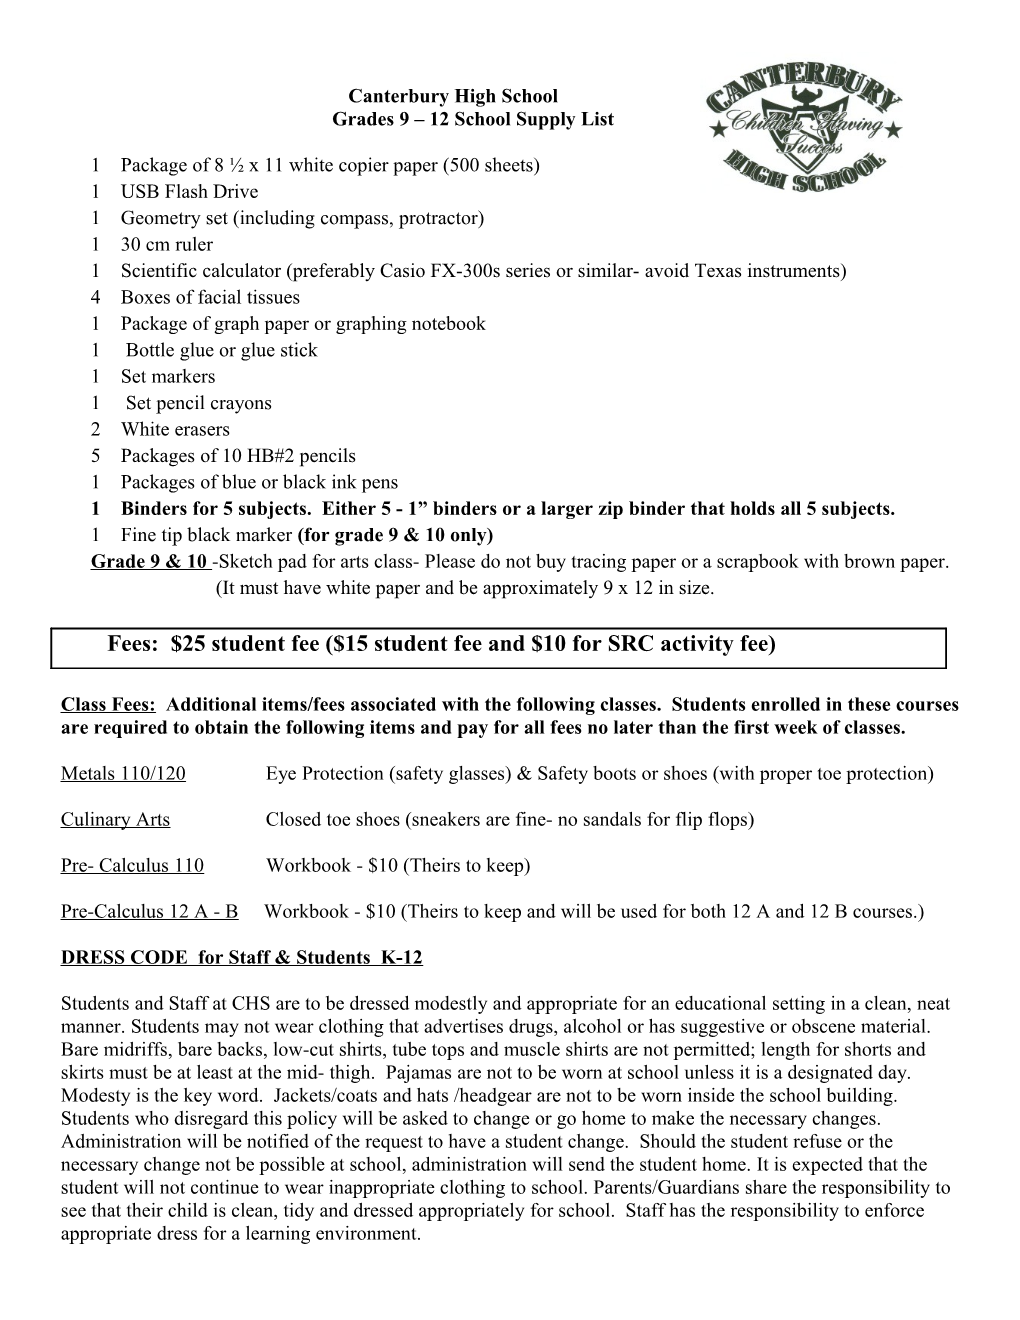 Grades 9 – 12 Supply List –Canterbury High School